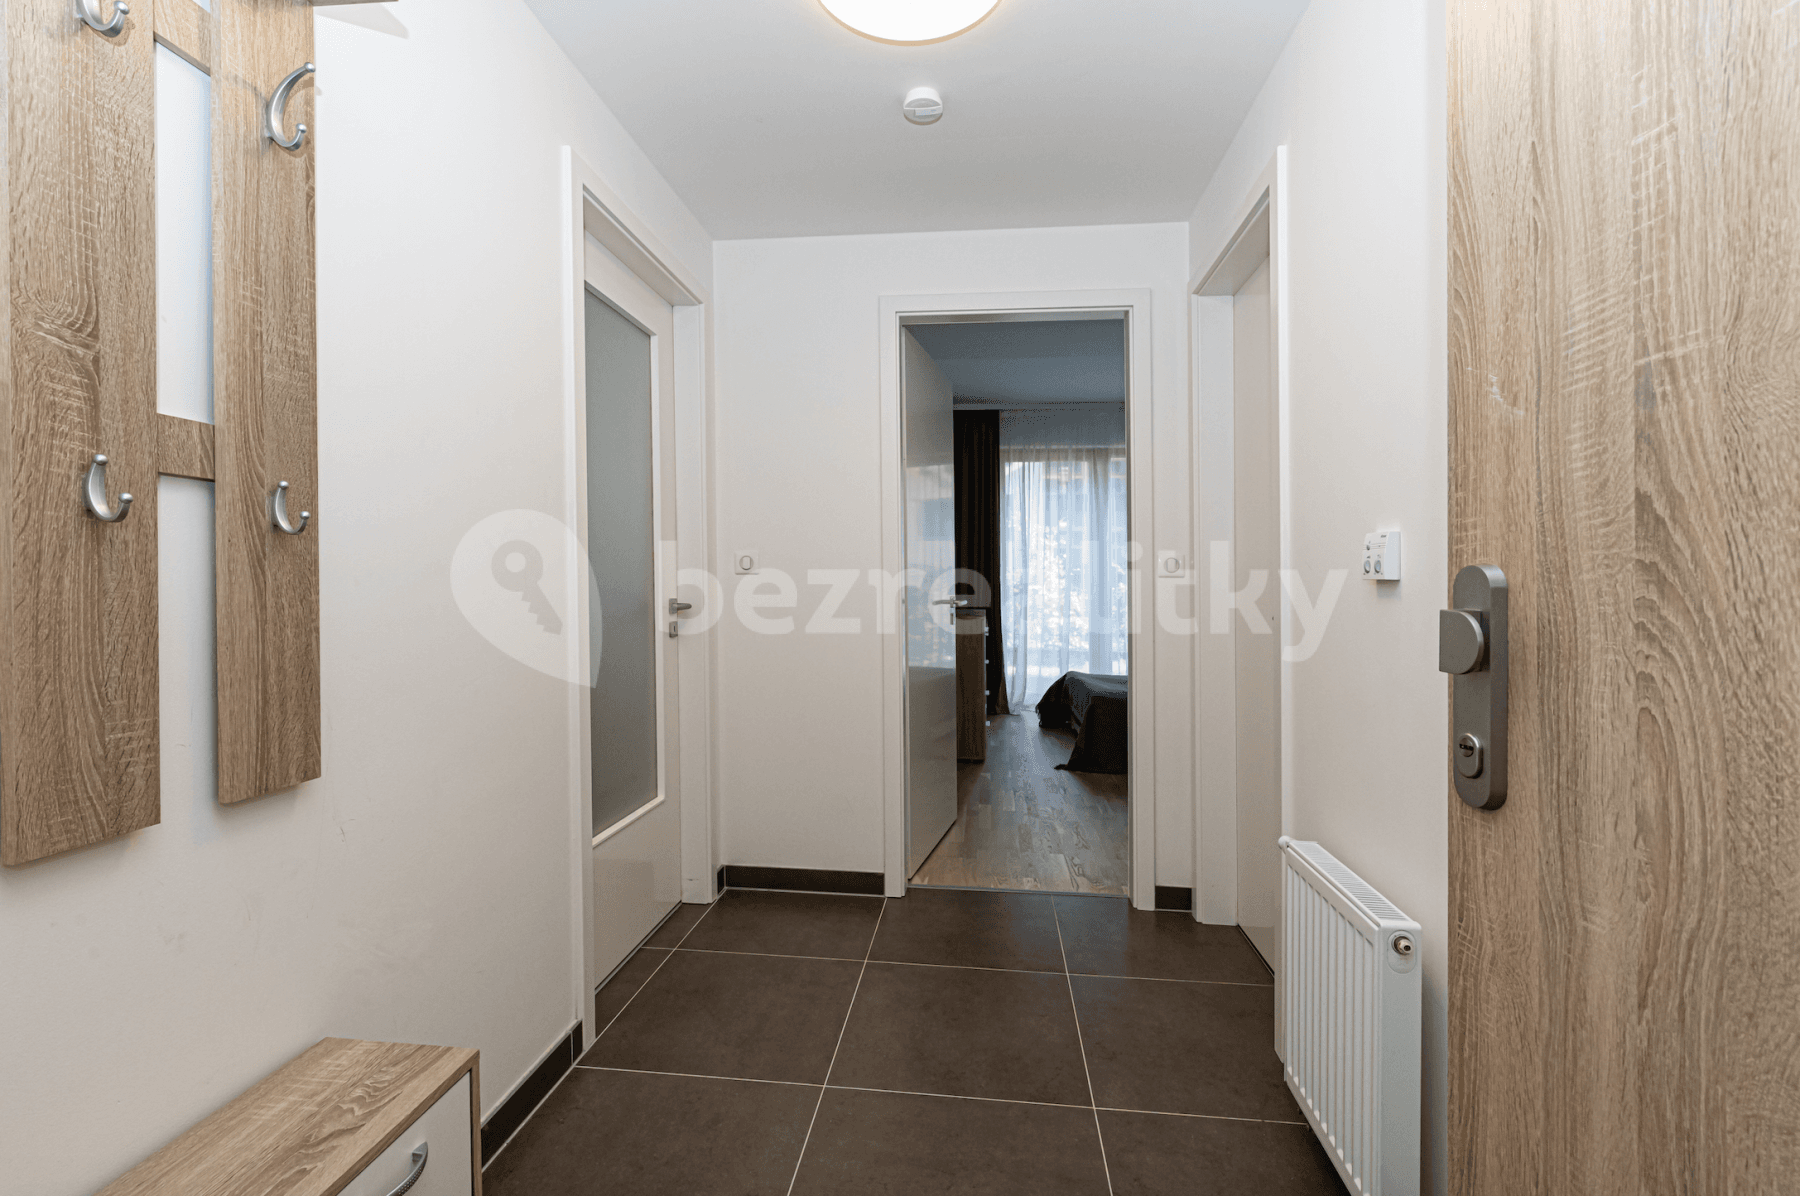 1 bedroom with open-plan kitchen flat for sale, 50 m², Univerzitní, Prague, Prague